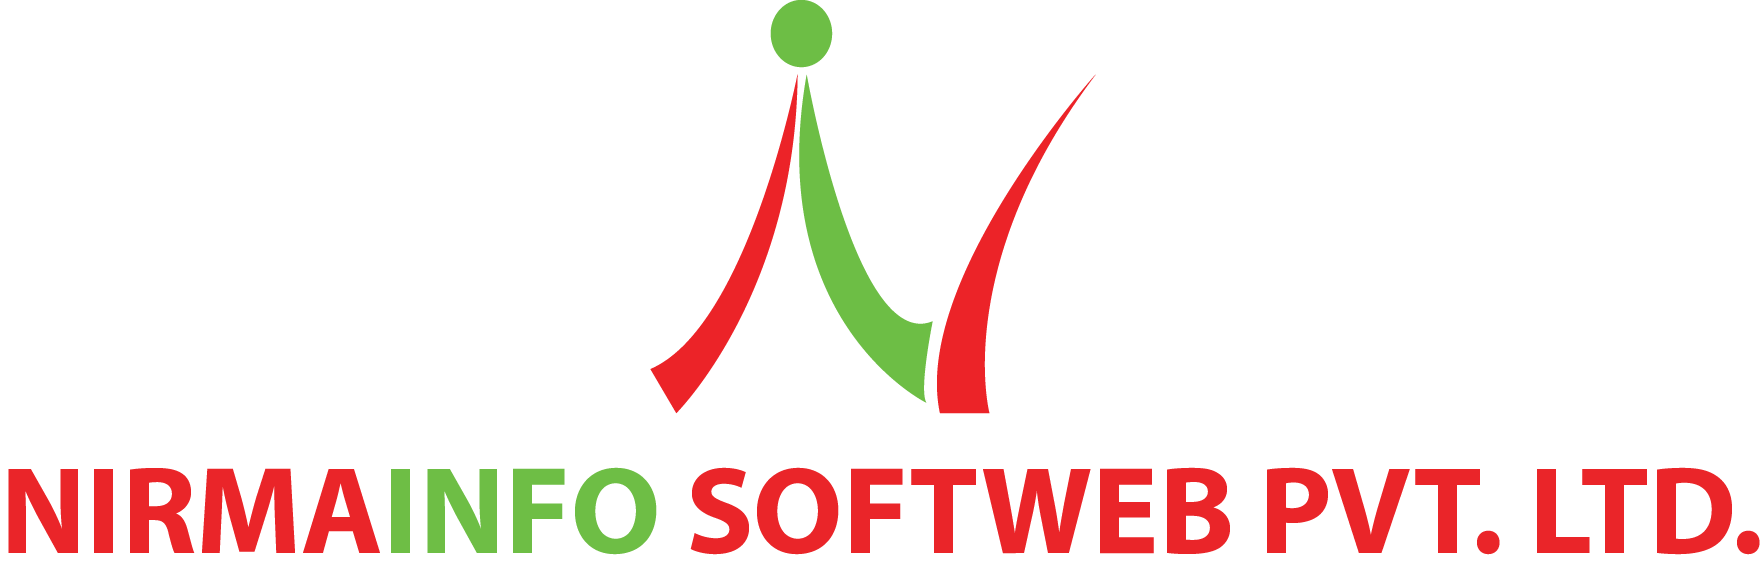 Nirmainfo Softweb Pvt. Ltd. profile on Qualified.One